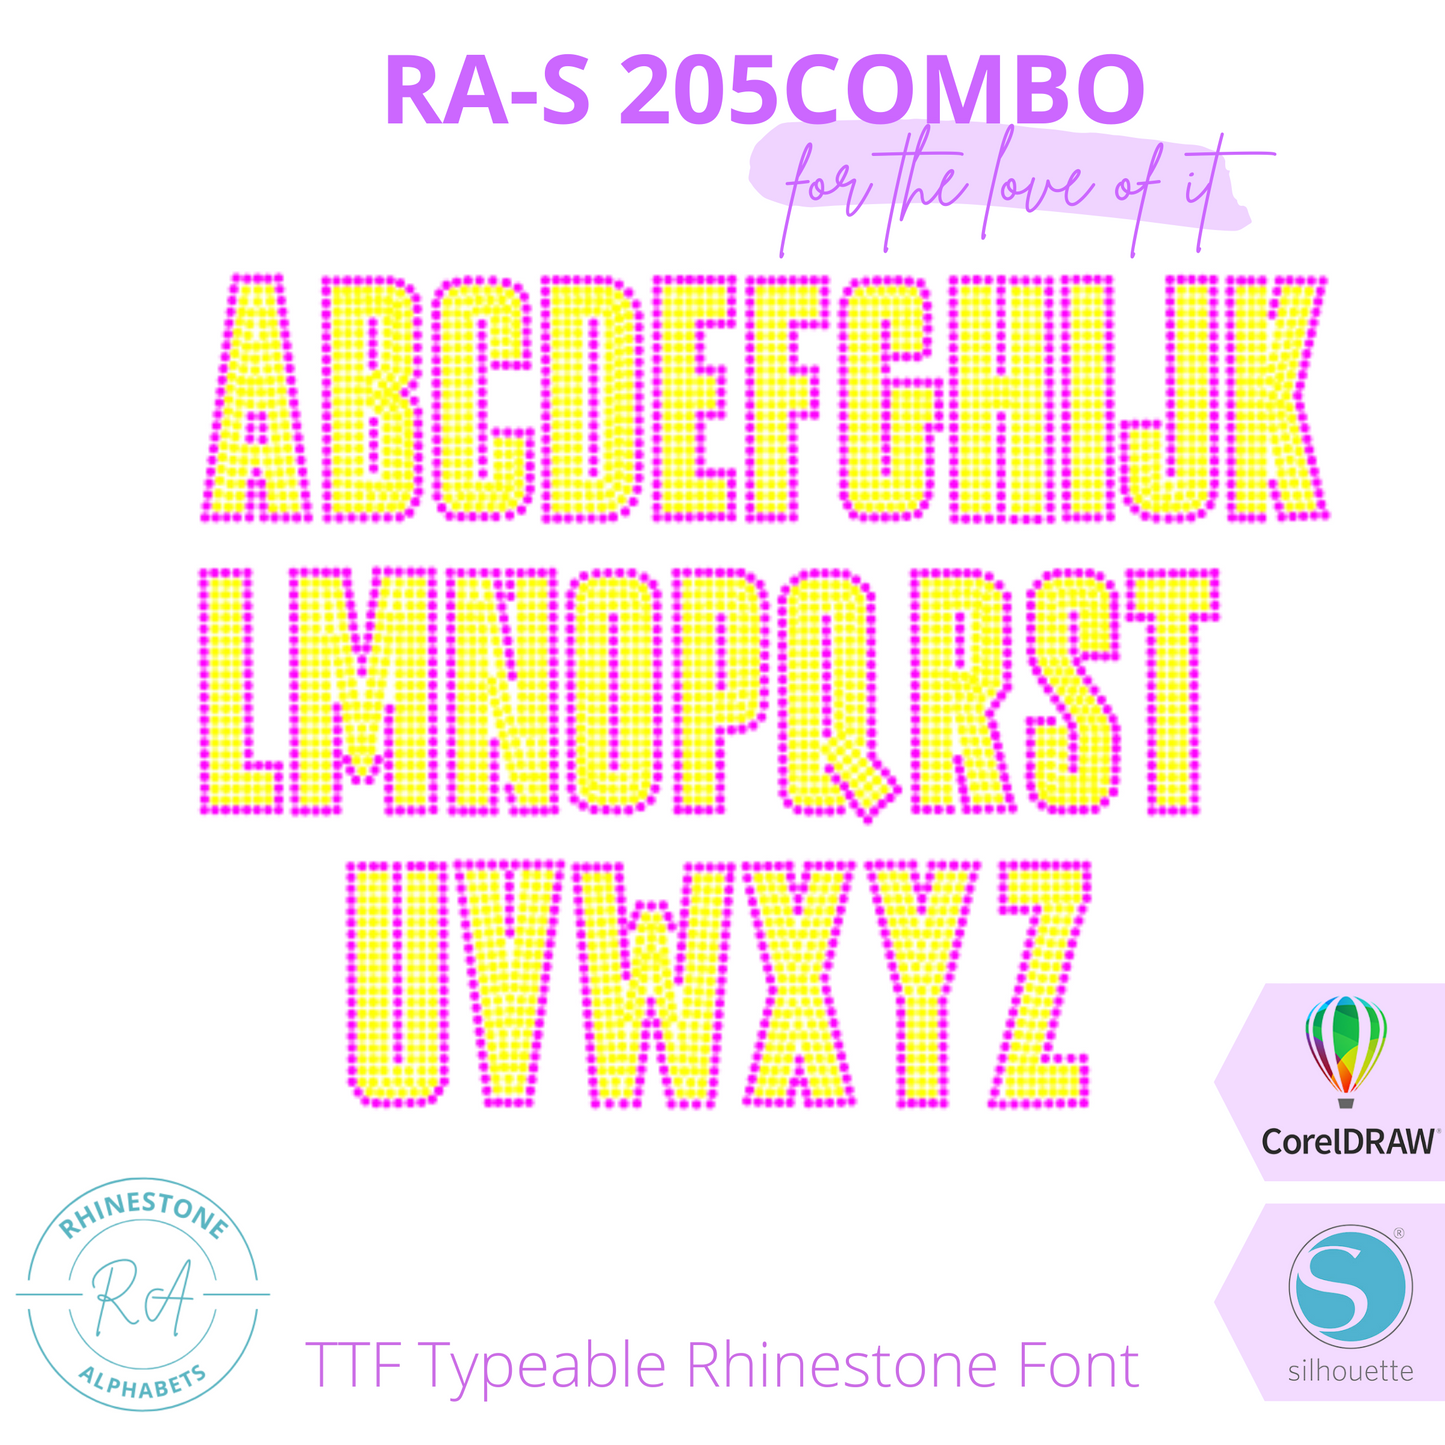 RA-S 205 Combo - RhinestoneAlphabets